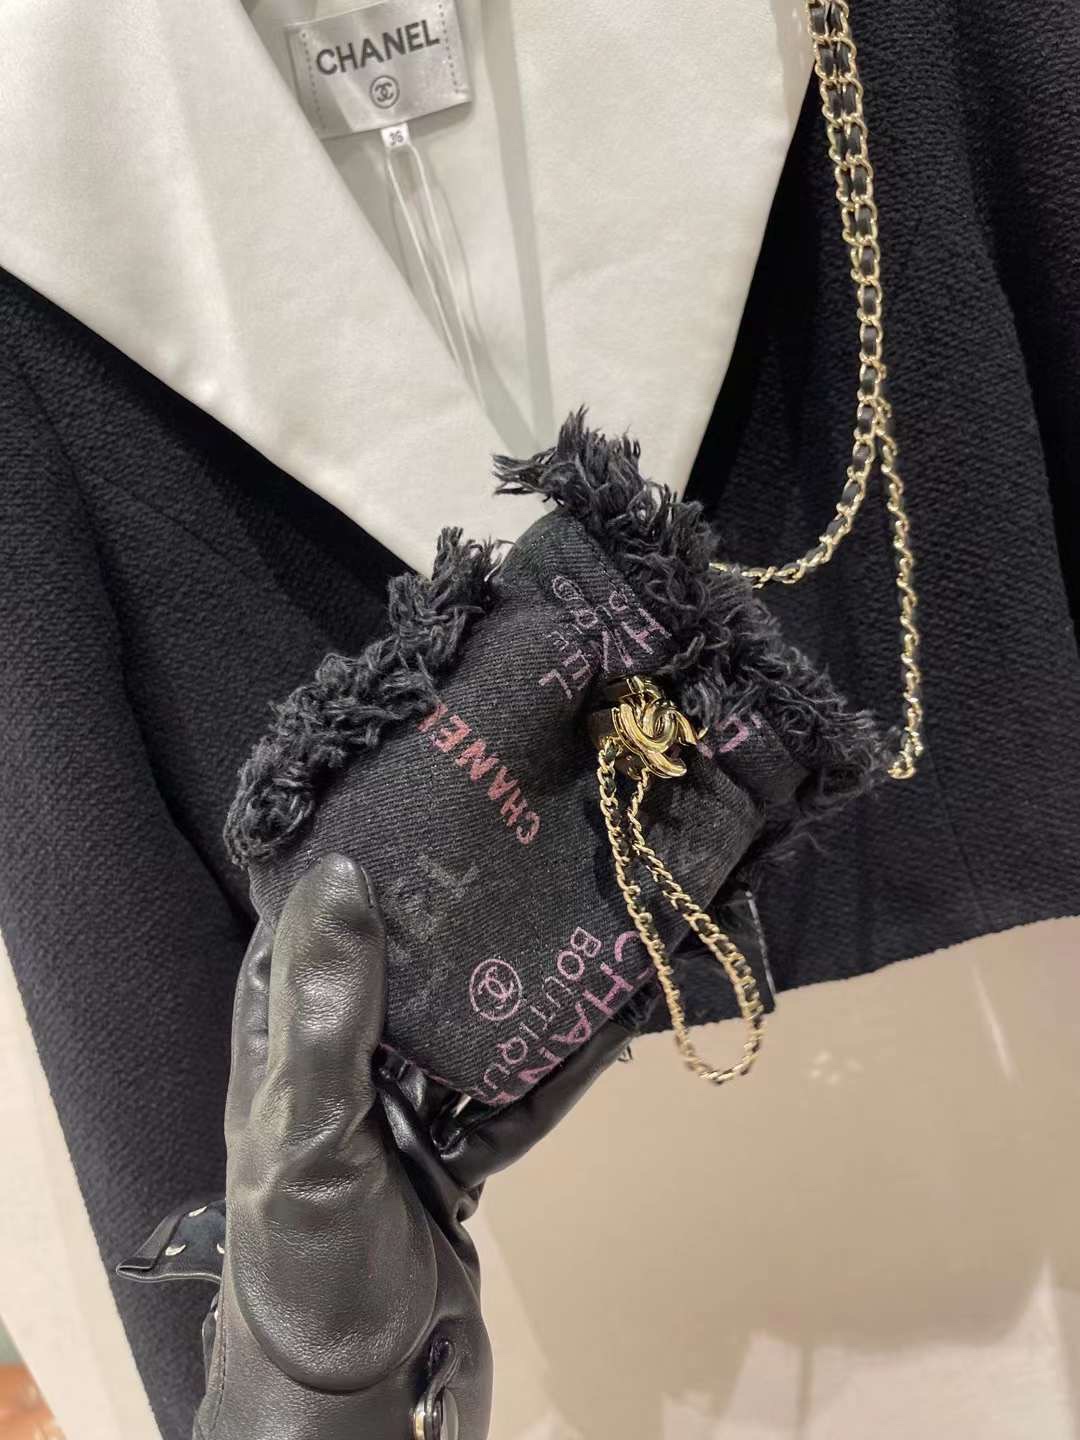 【P870】Chanel包包批发 香奈儿新款黑色涂鸦牛仔布抽口水桶包迷你款